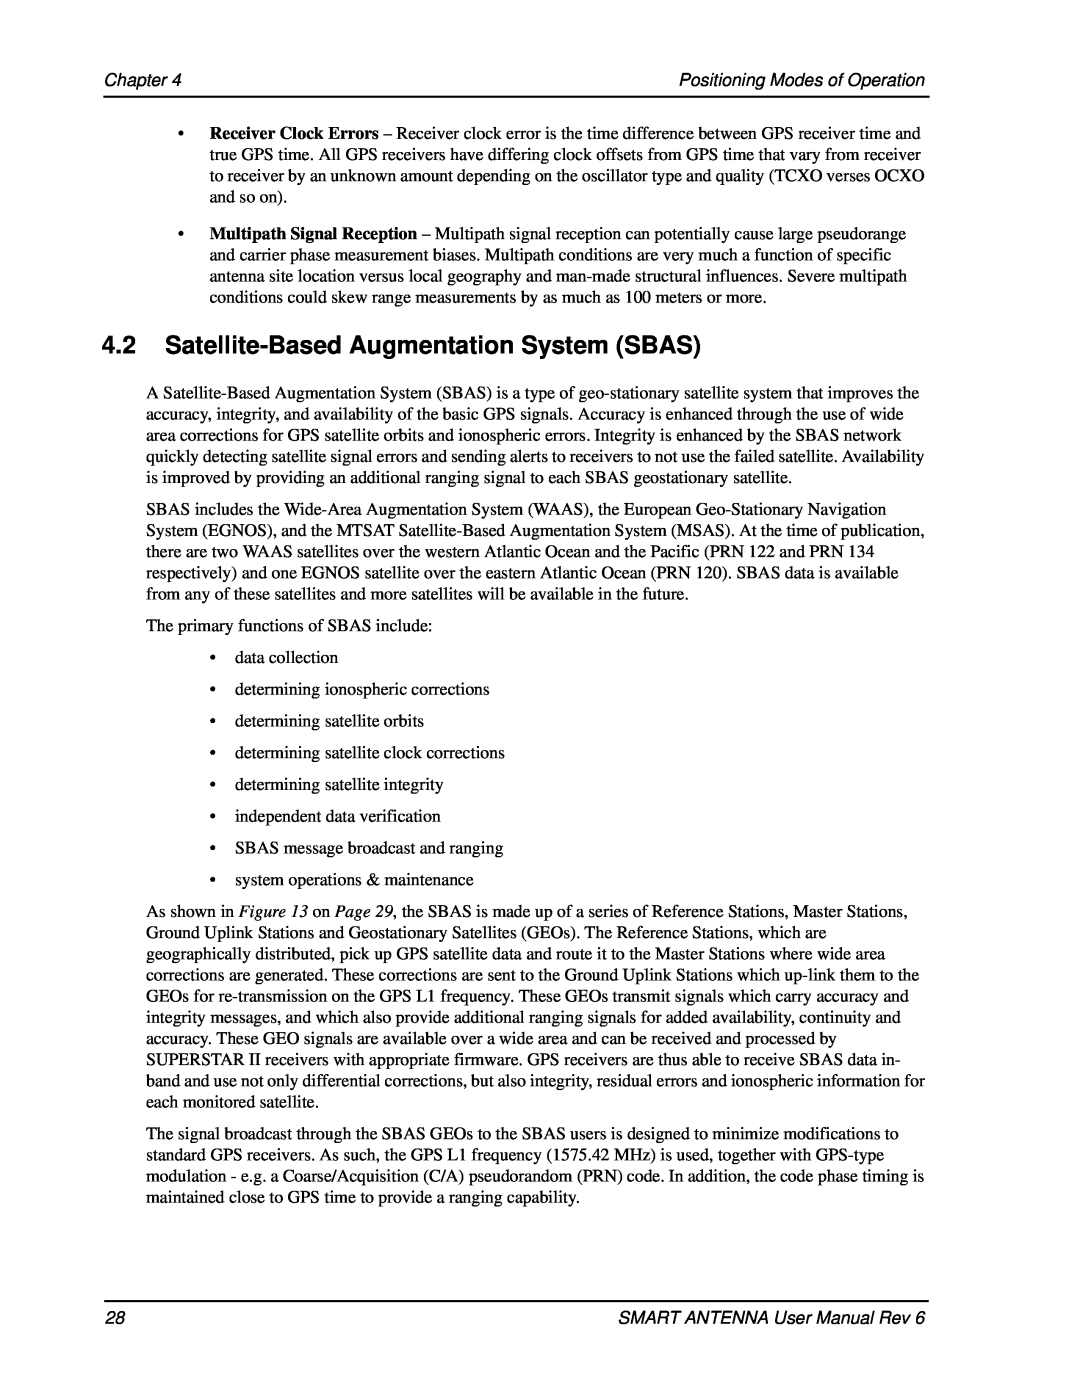 Novatel SMART ANTENNA user manual 4.2Satellite-BasedAugmentation System SBAS, Chapter, Positioning Modes of Operation 